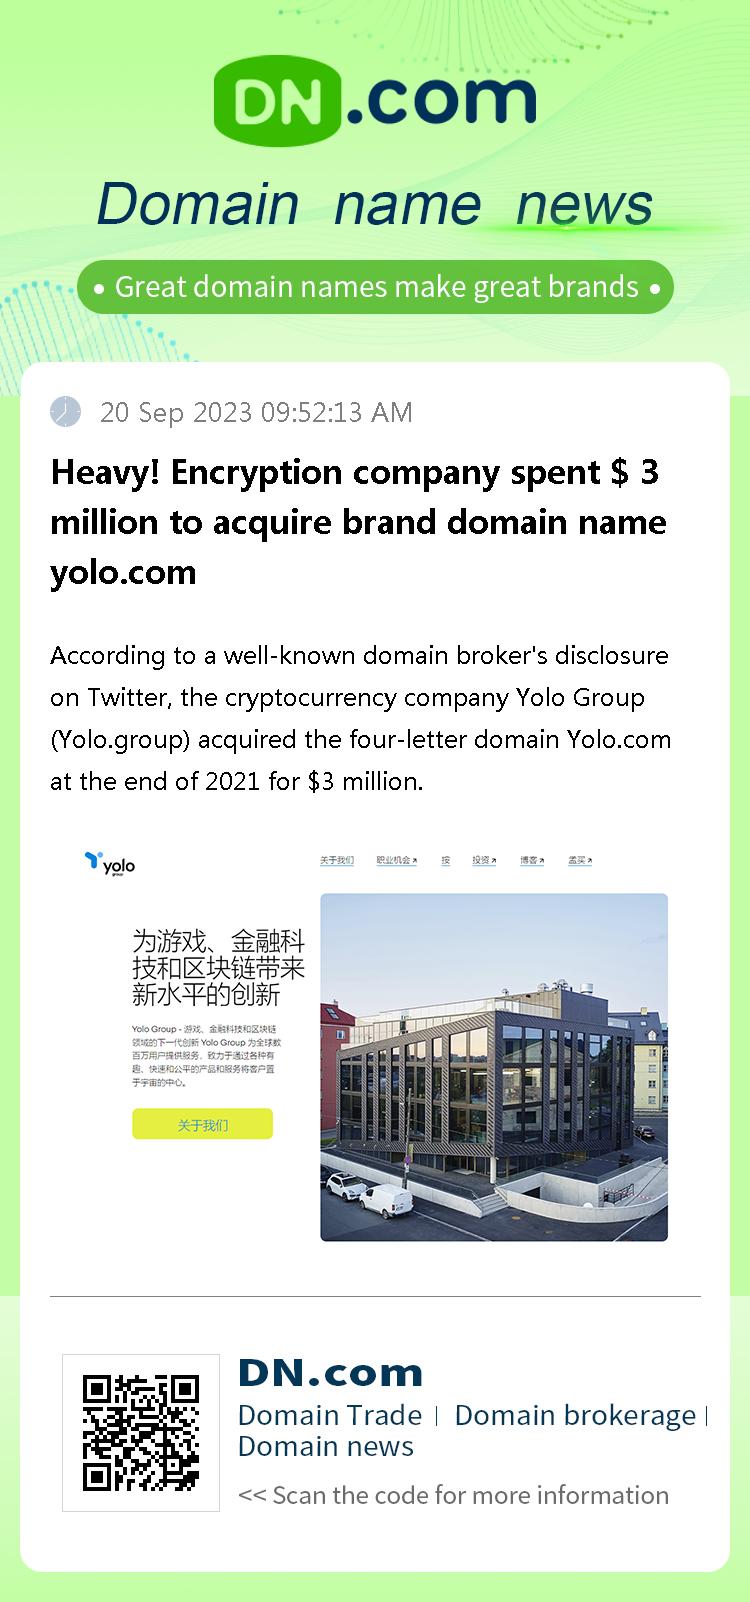 Heavy! Encryption company spent $ 3 million to acquire brand domain name yolo.com